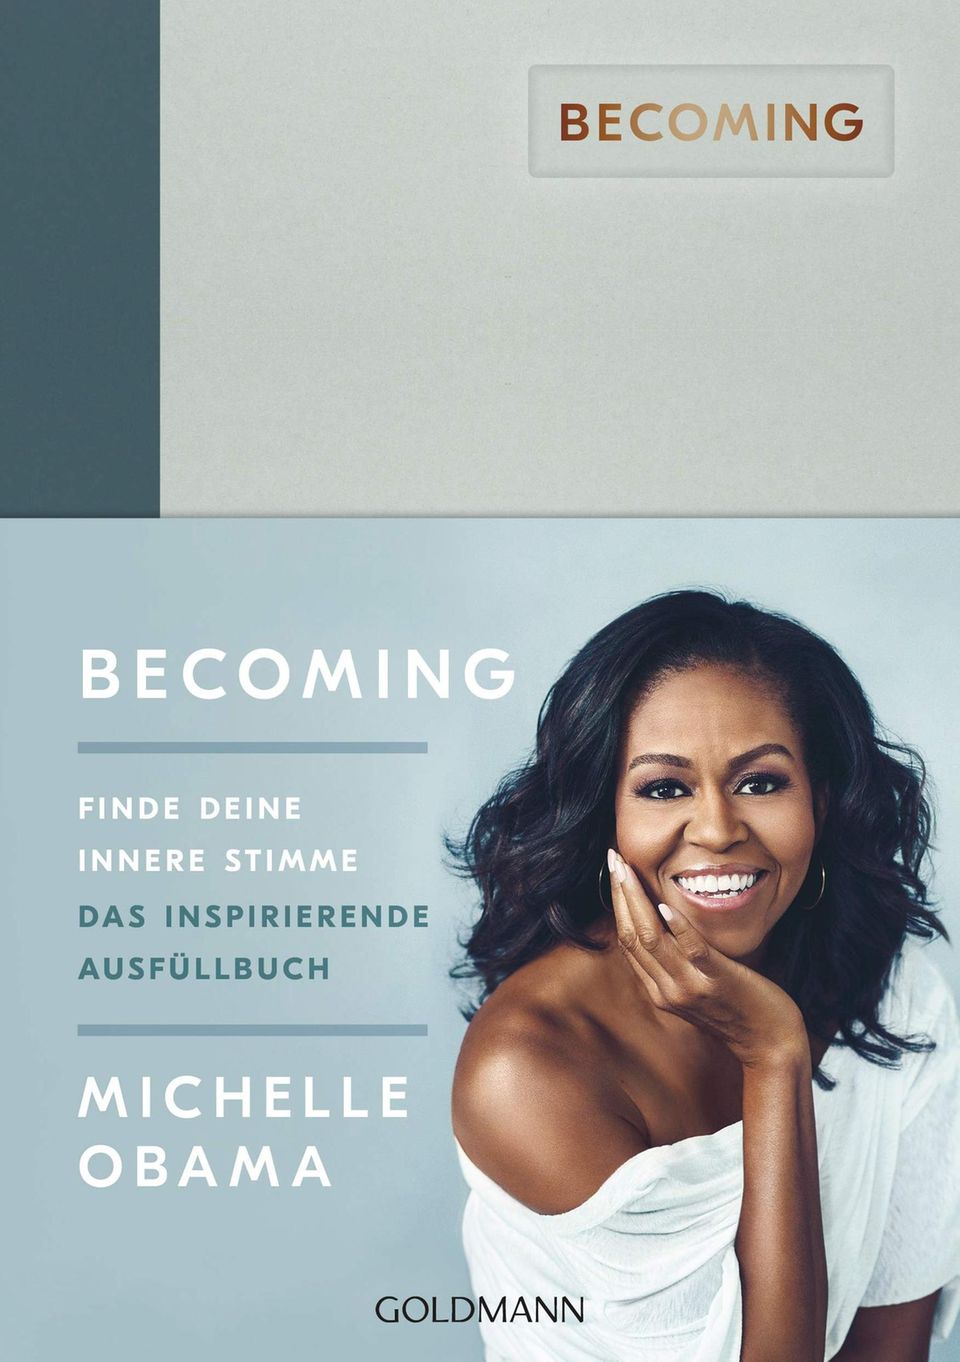 Michele Obama: Becoming – Ausfüllbuch